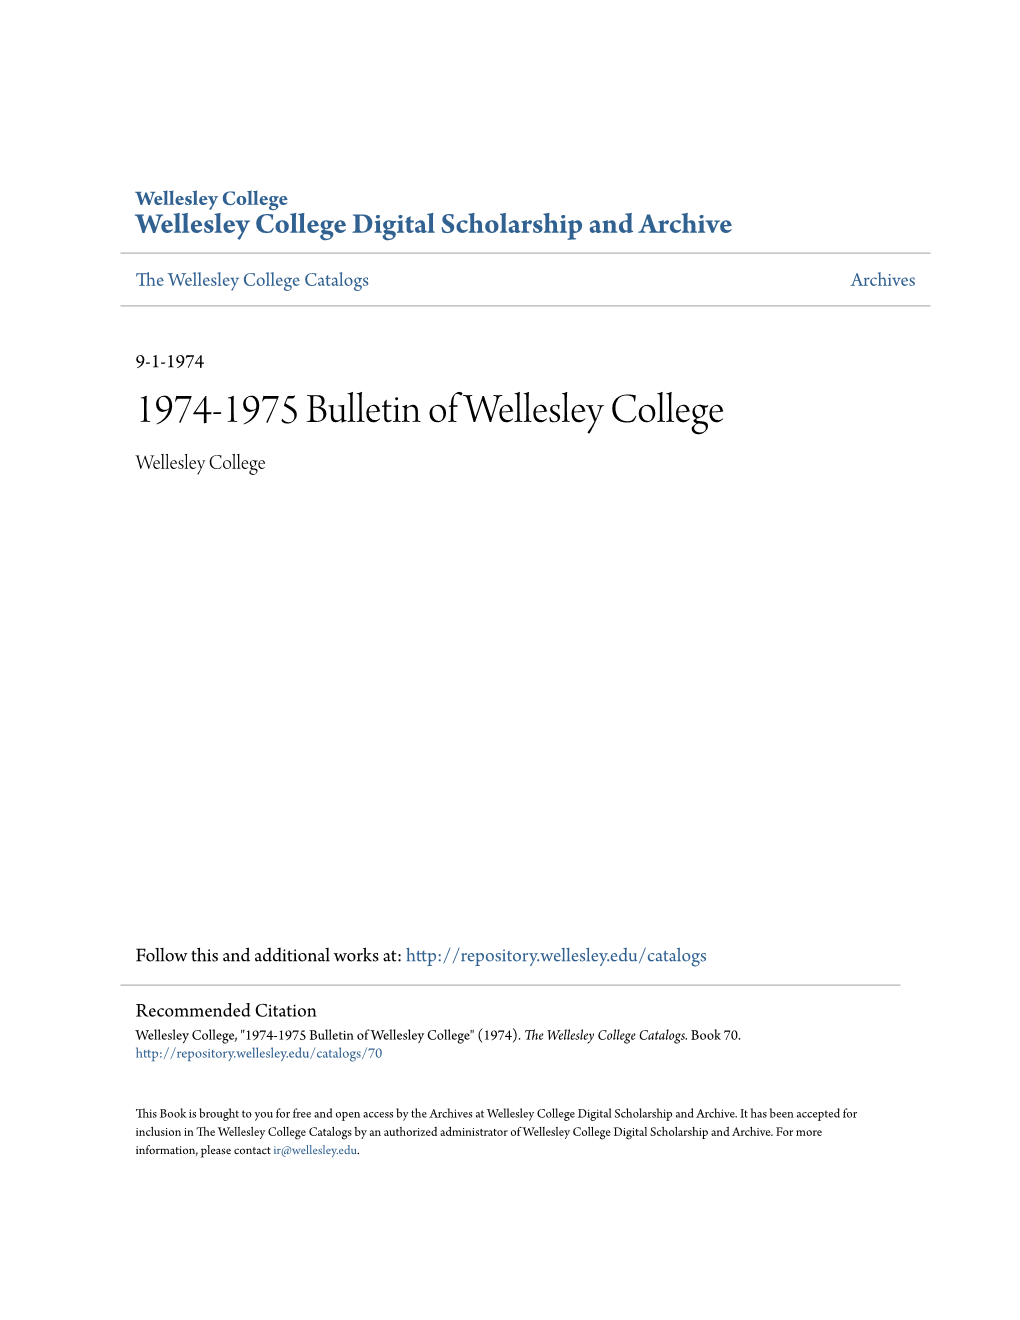 1974-1975 Bulletin of Wellesley College Wellesley College